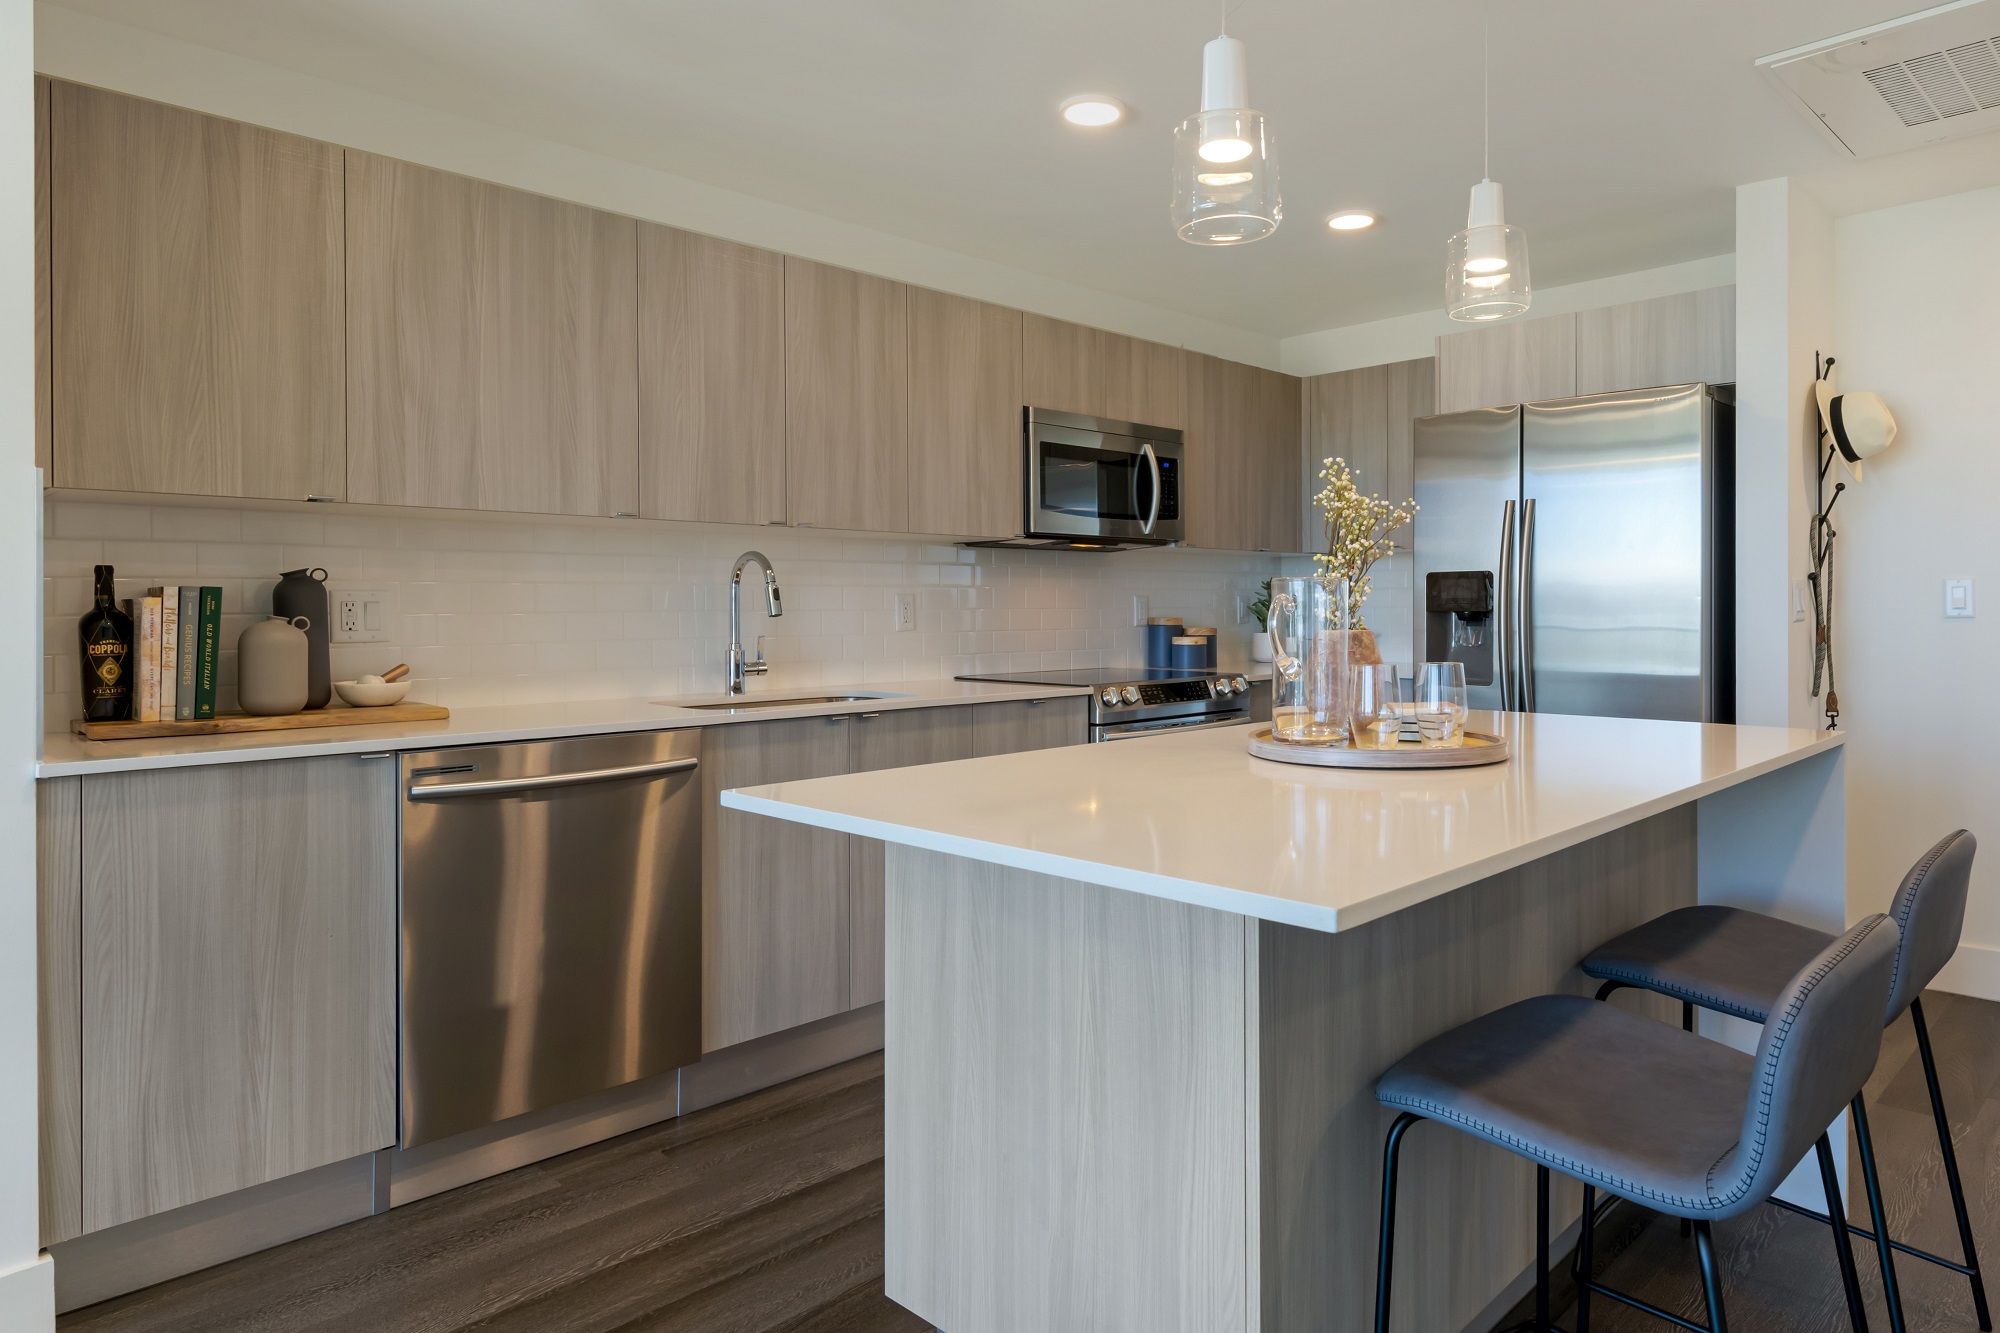 Open concept kitchen with quartz countertops, kitchen island with bar seating, designer lighting, and tile backsplash